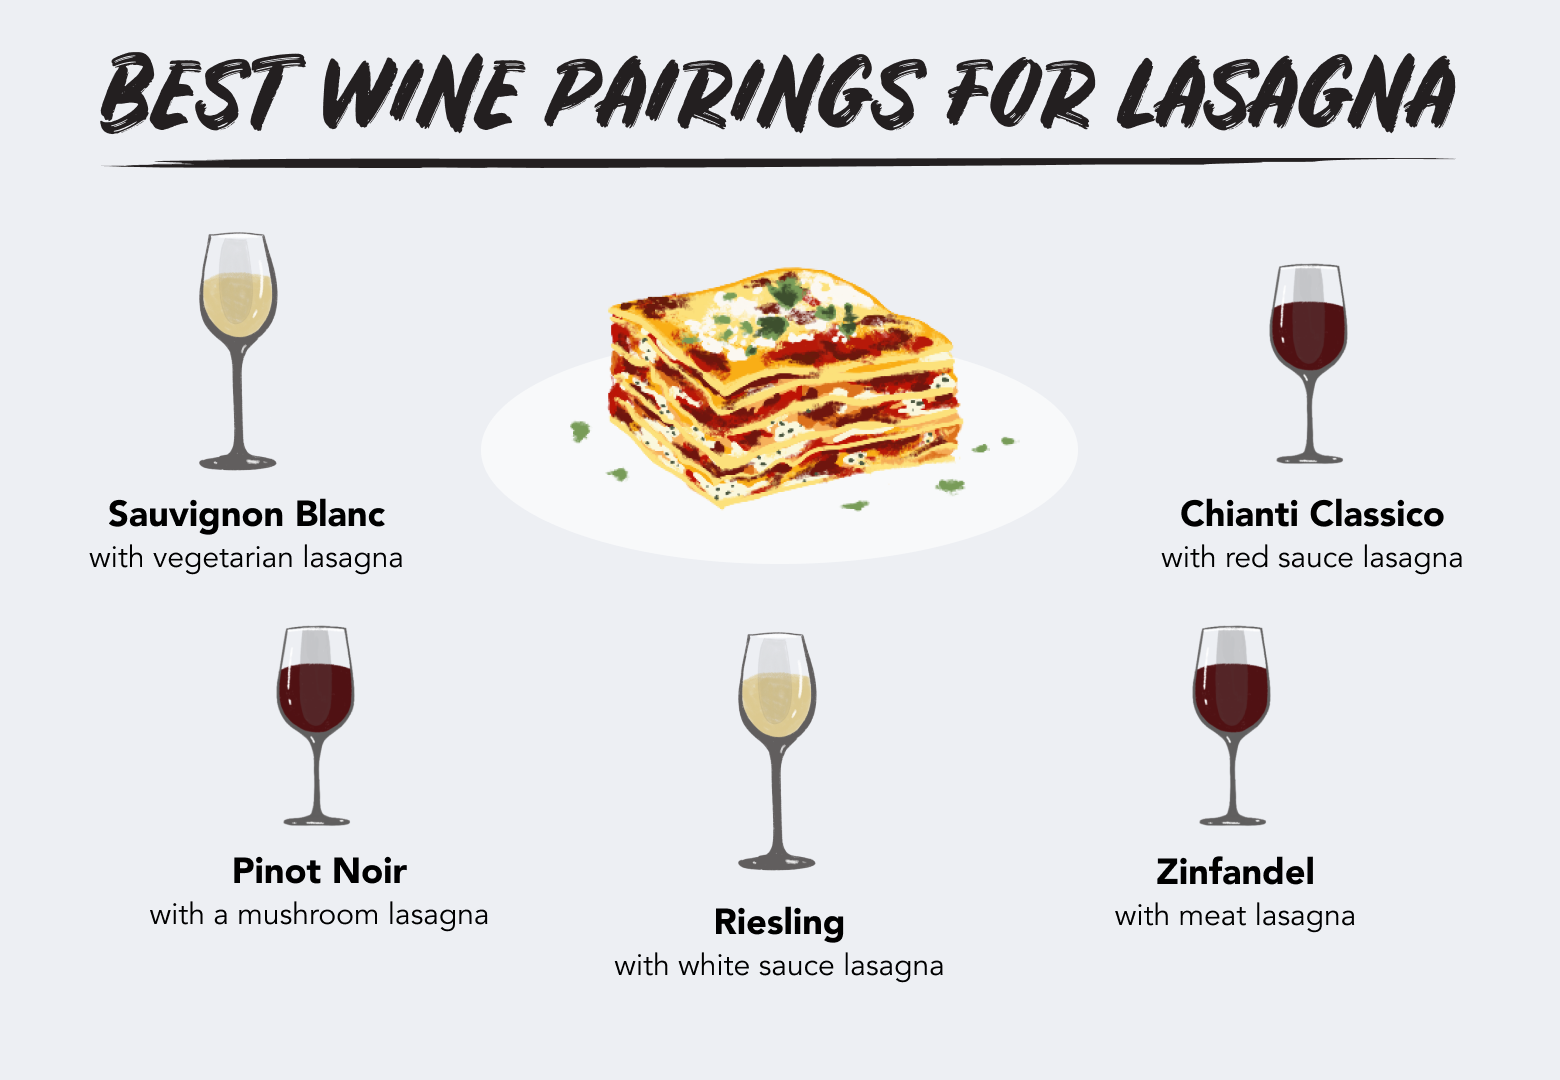 Best wine pairings for lasagna